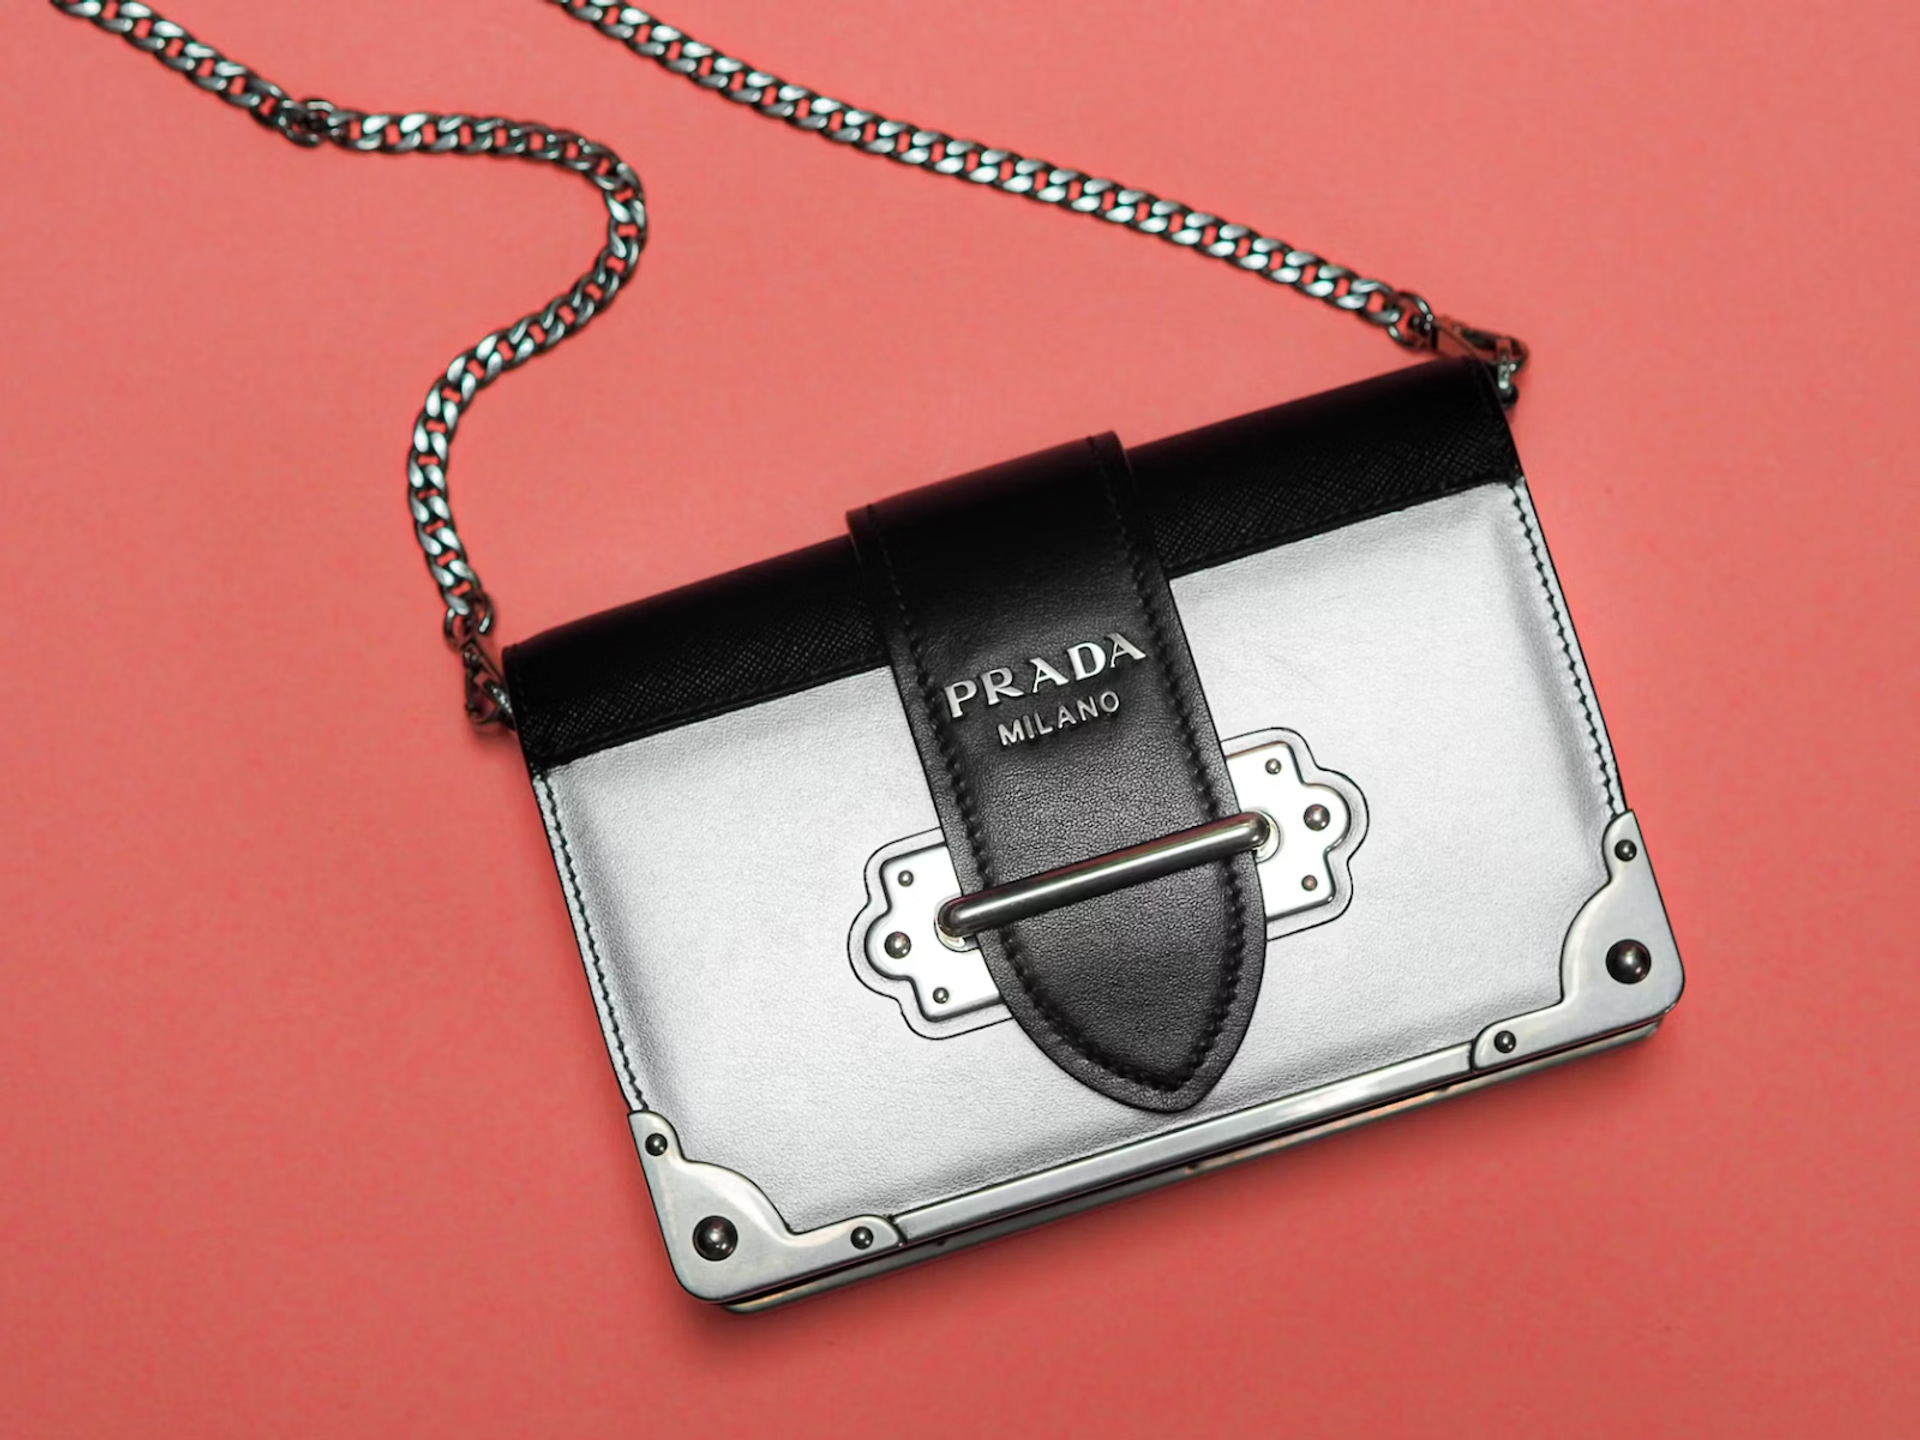 Prada handbag with silver hardware on a pink surface